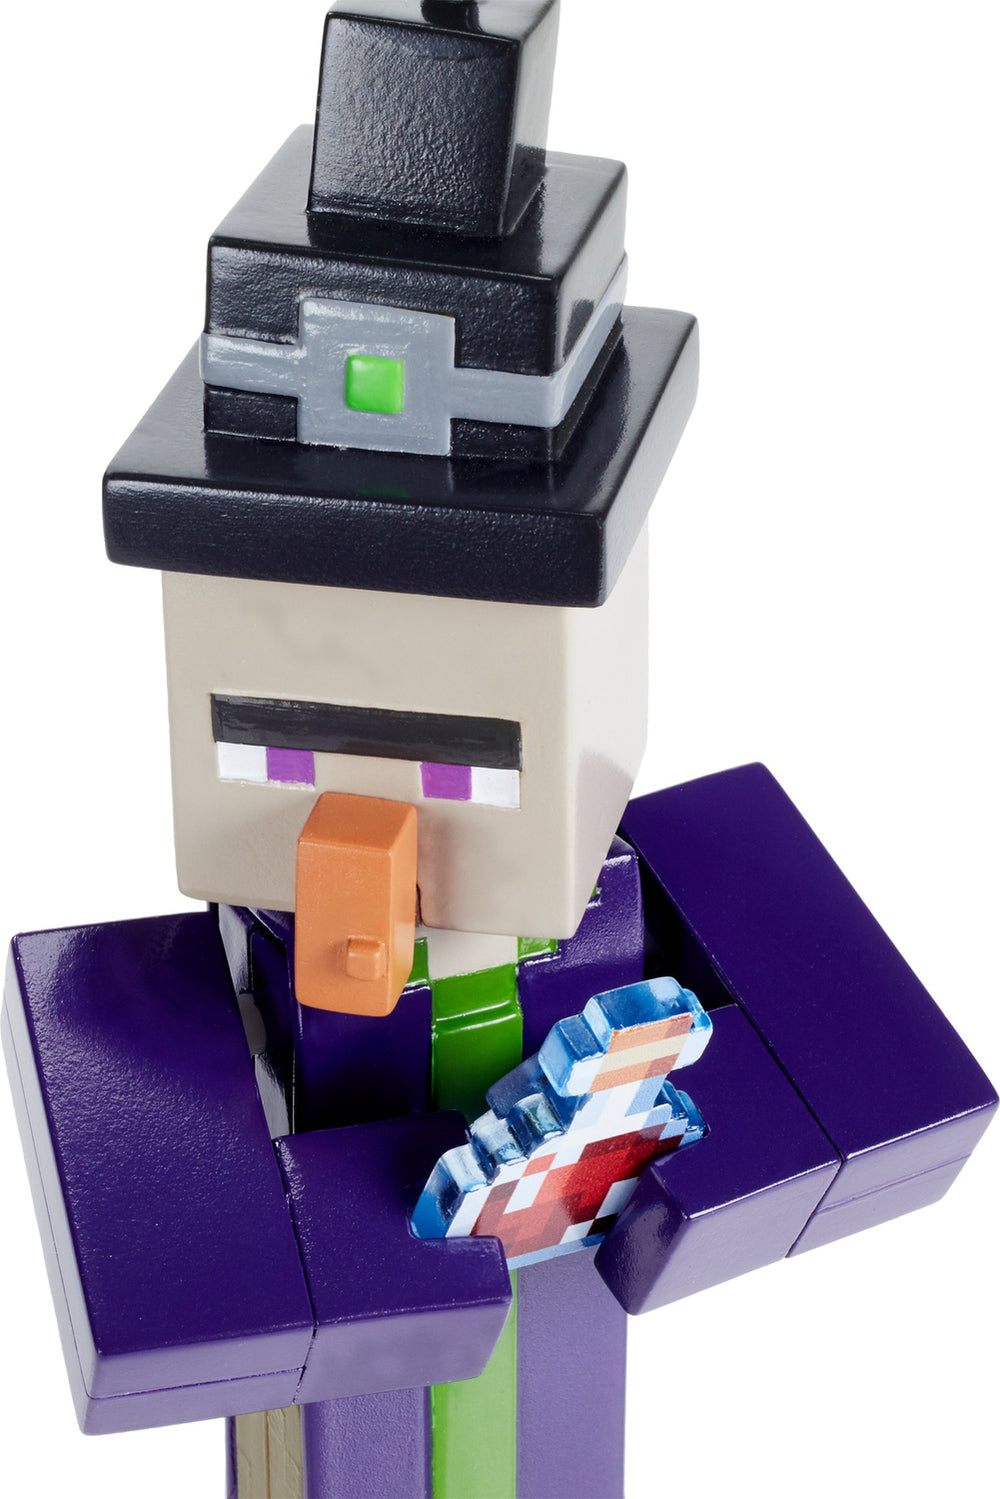 Minecraft Craft-A-Block Figures (assorted)